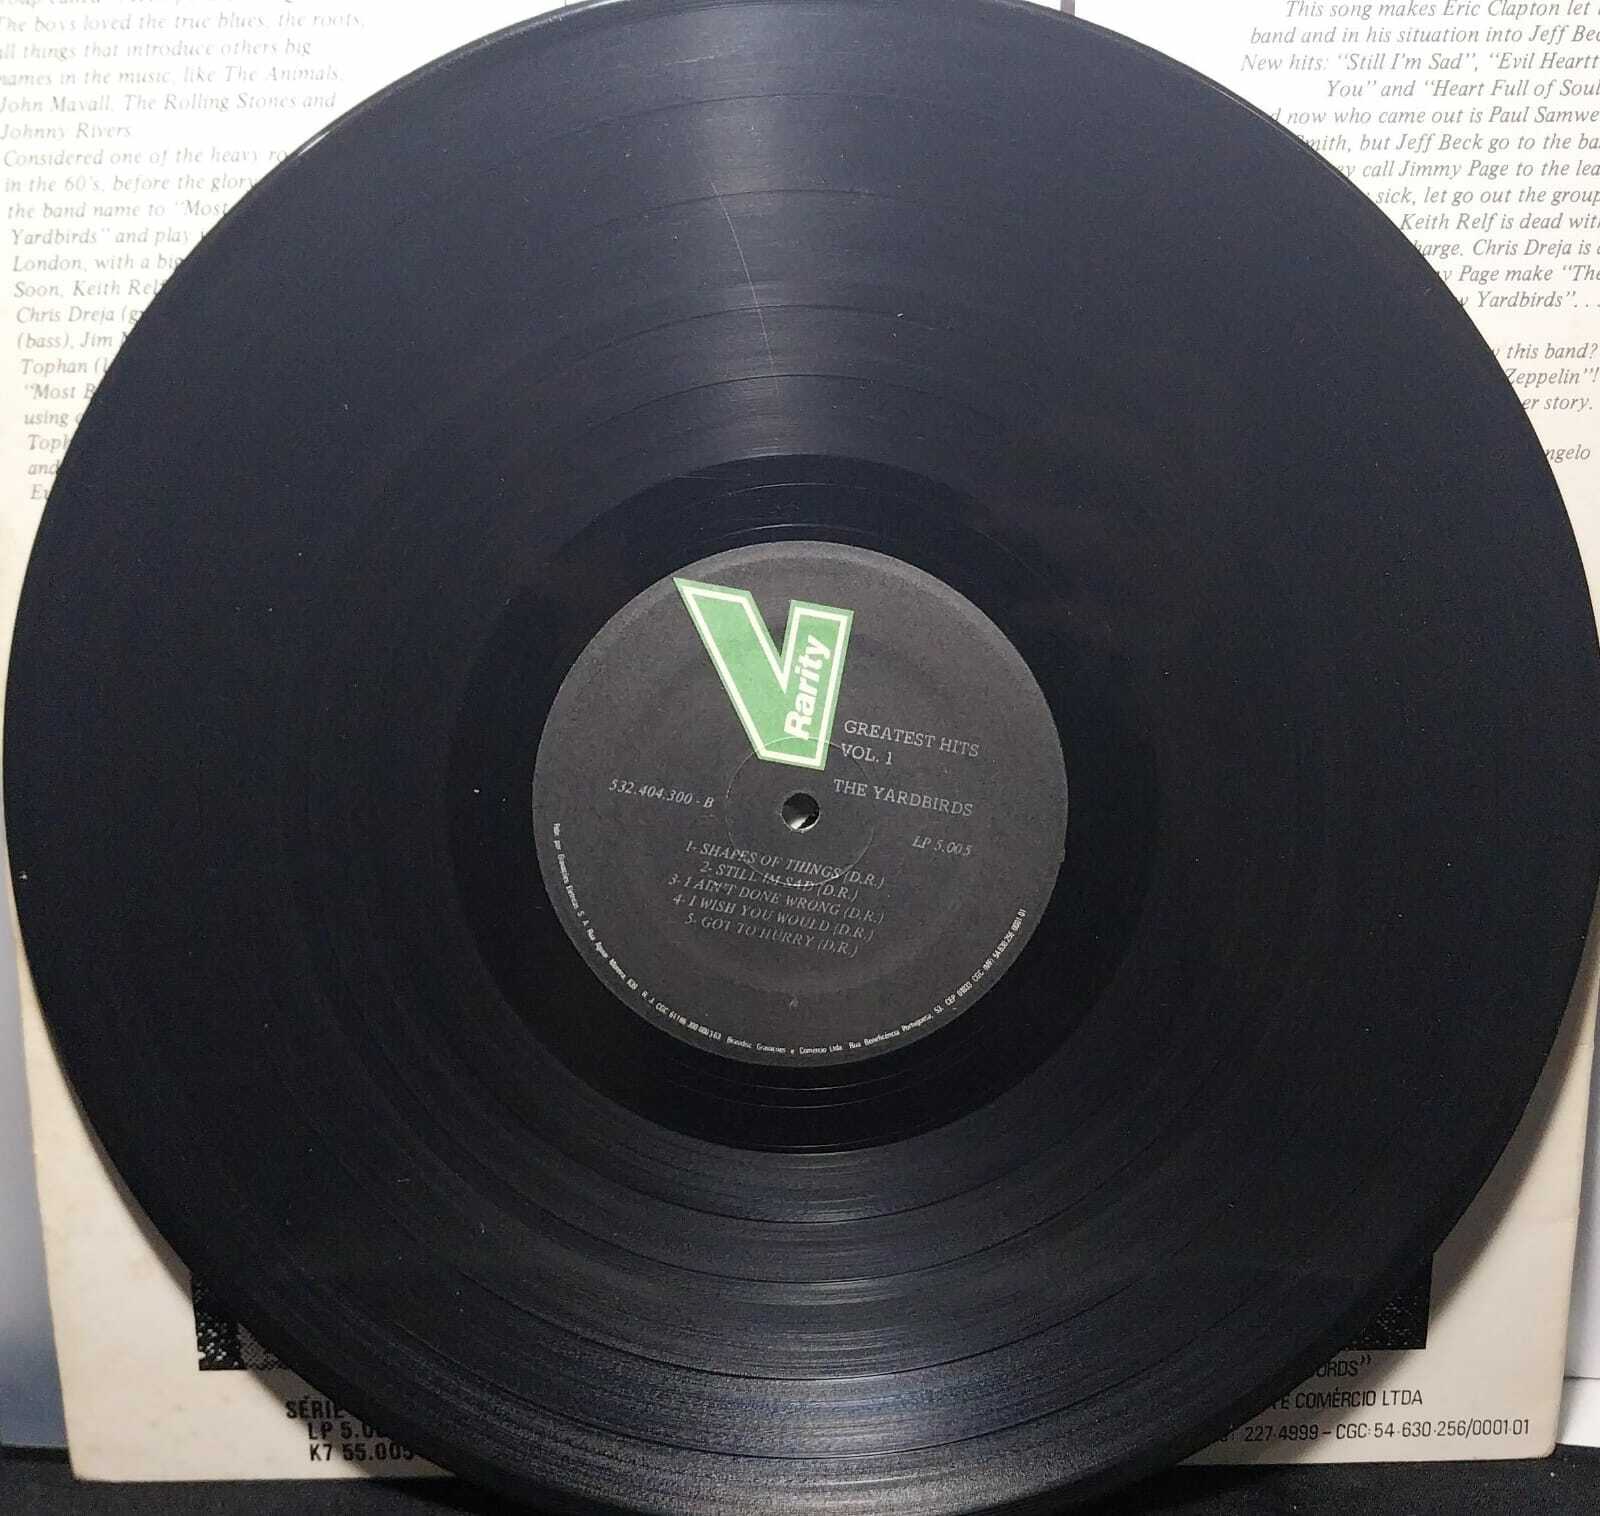 Vinil - Yardbirds The - Greatest Hits Vol 1